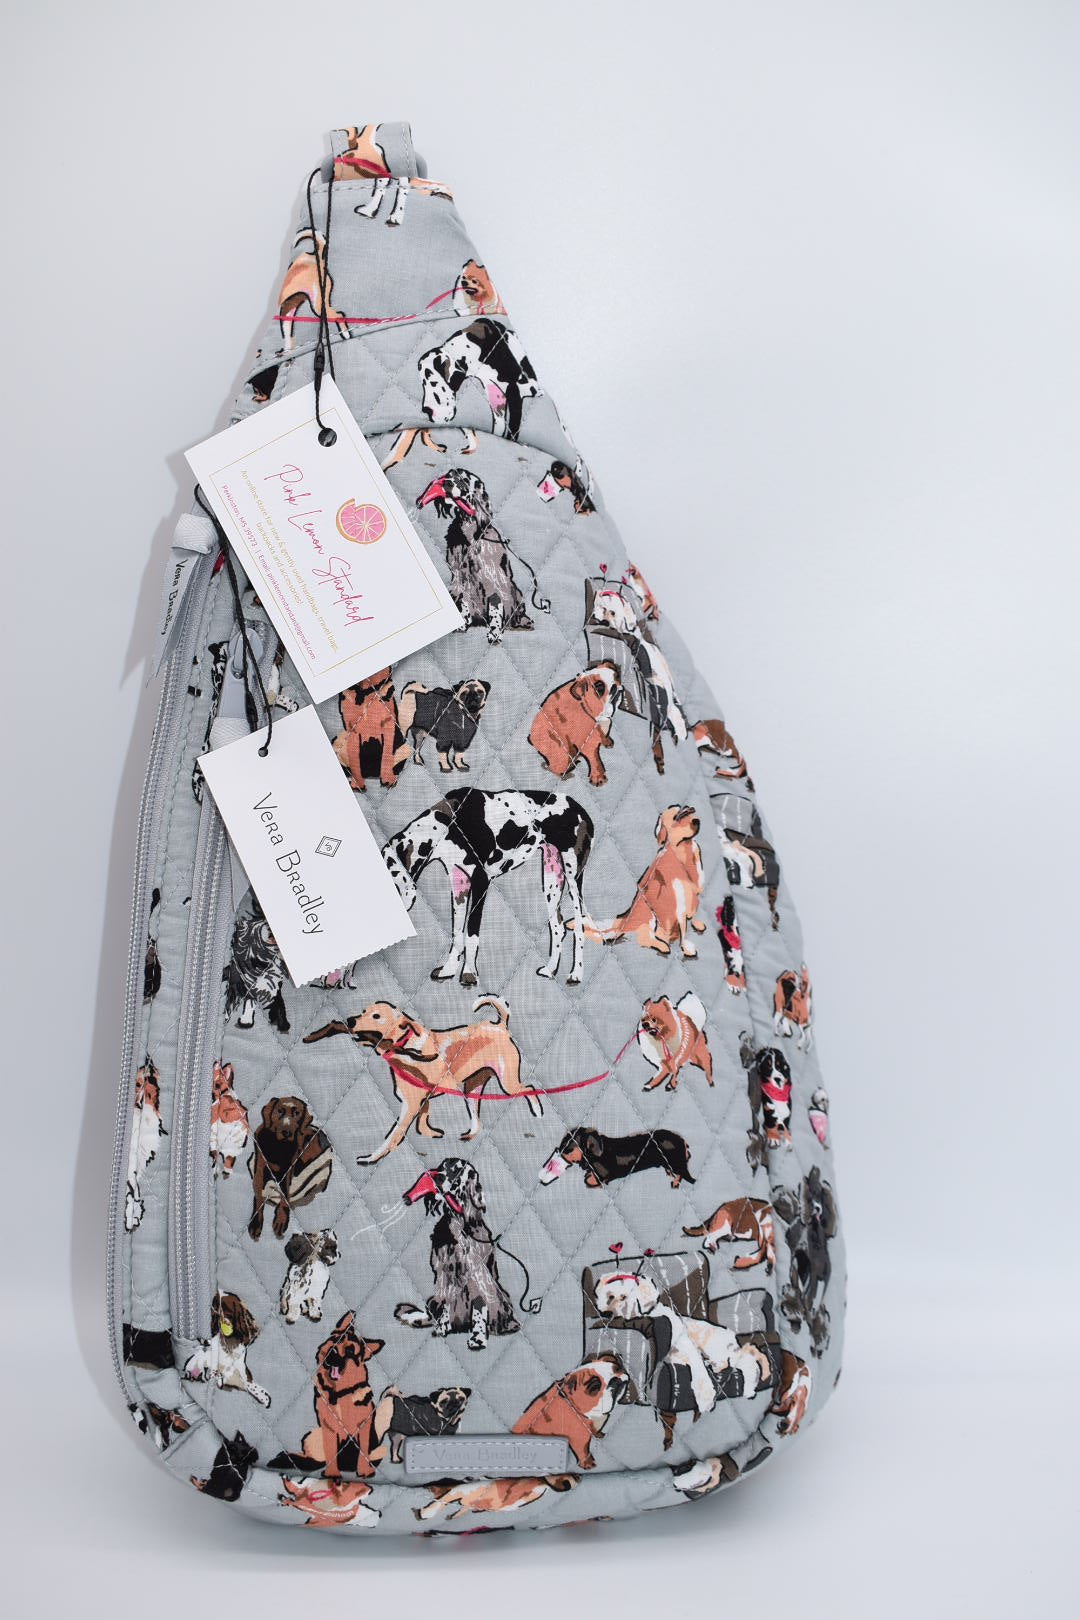 Vera Bradley Essential Sling Backpack in "Dog Show" Pattern